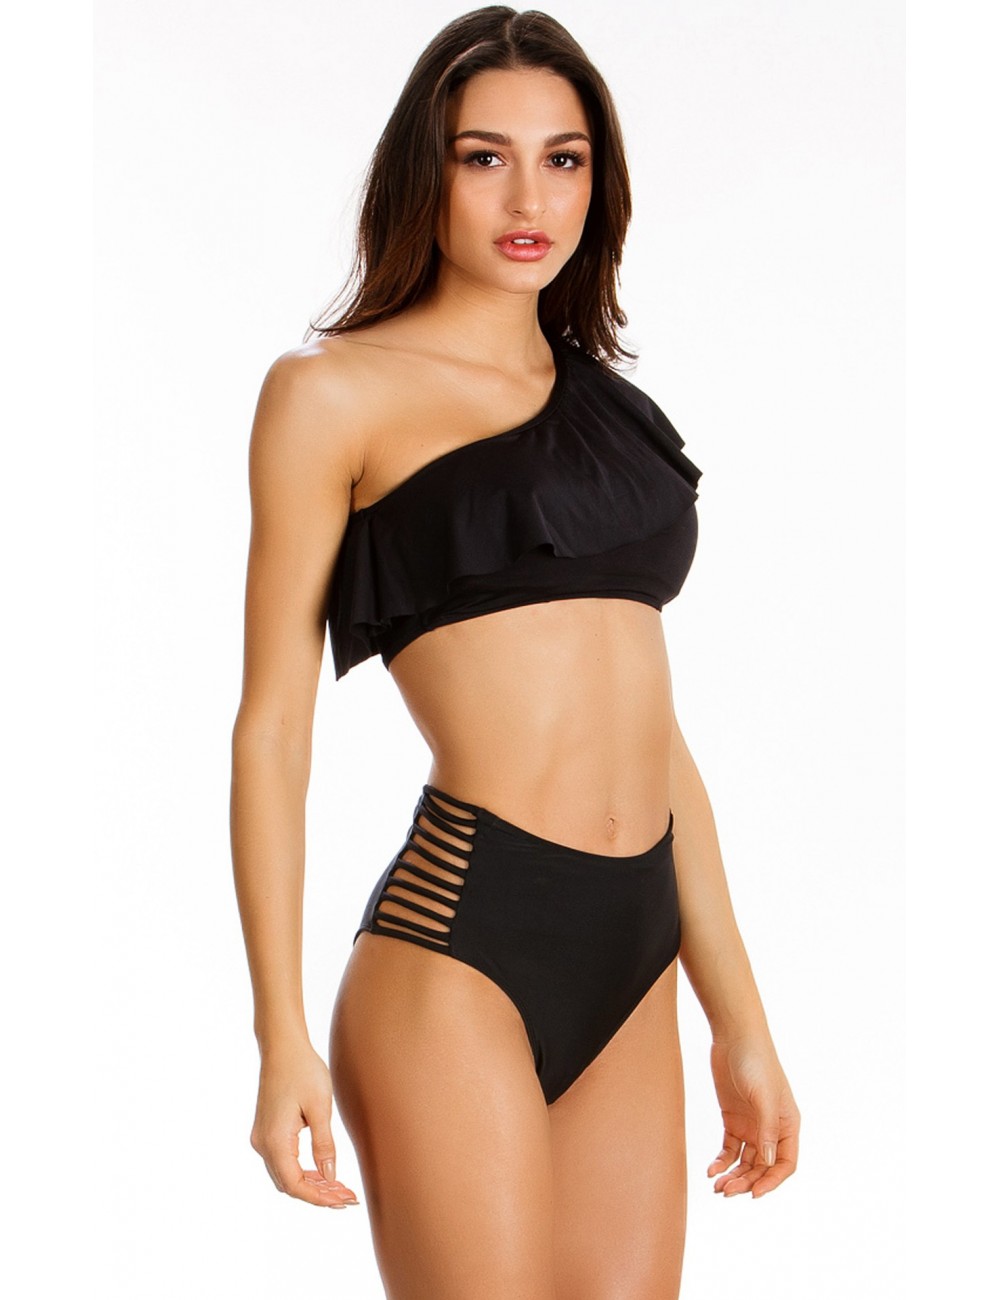 Minerva Γυναικείο Bikini Top με Έναν Ώμο 9428B Lamoda.gr